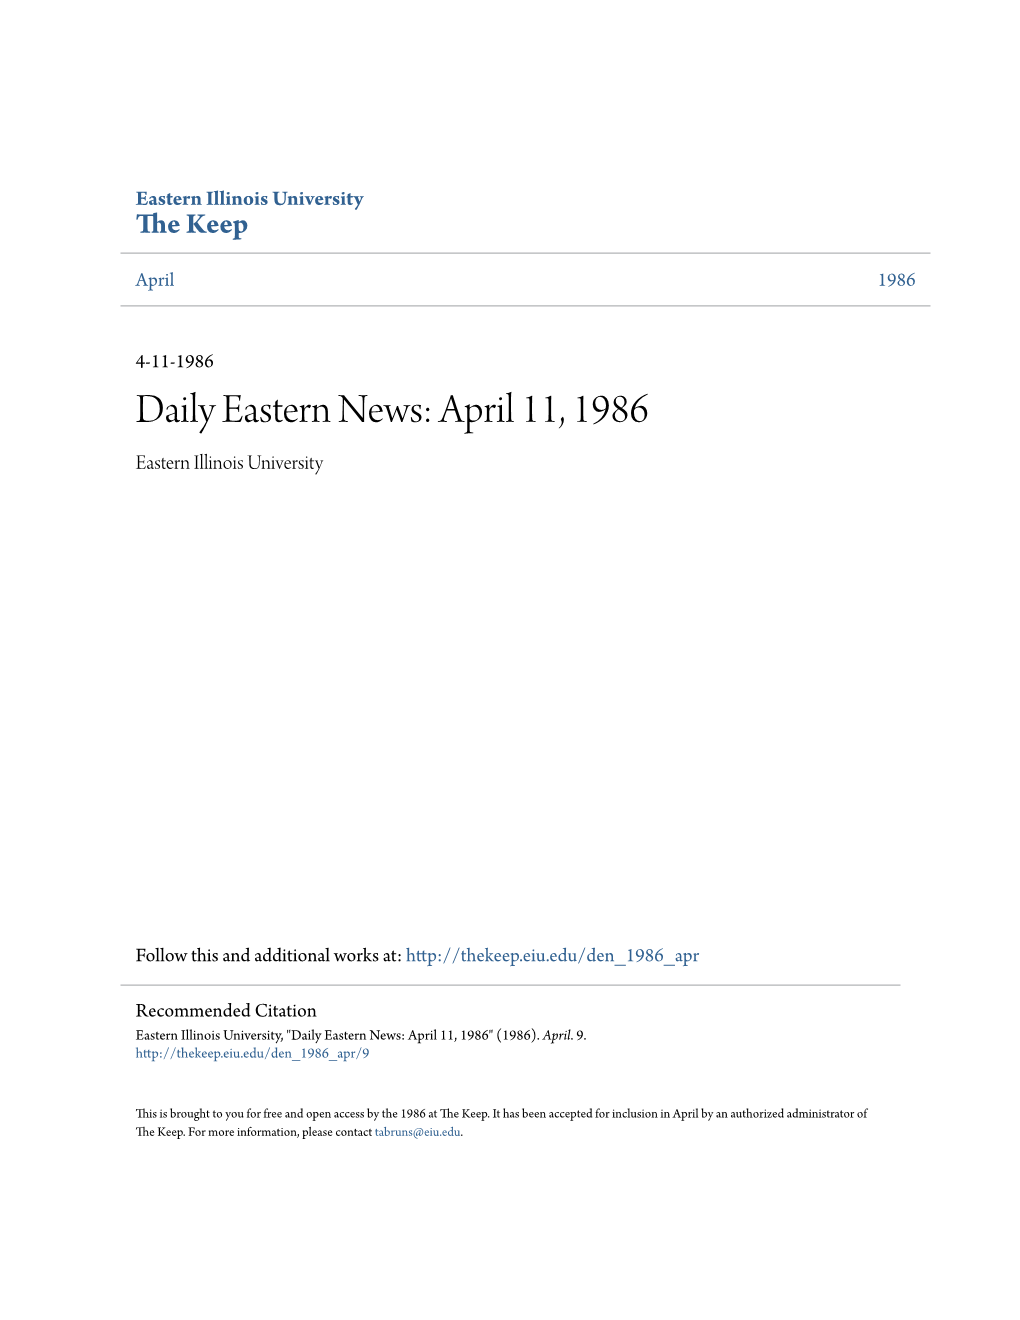 Stern News: April 11, 1986 Eastern Illinois University